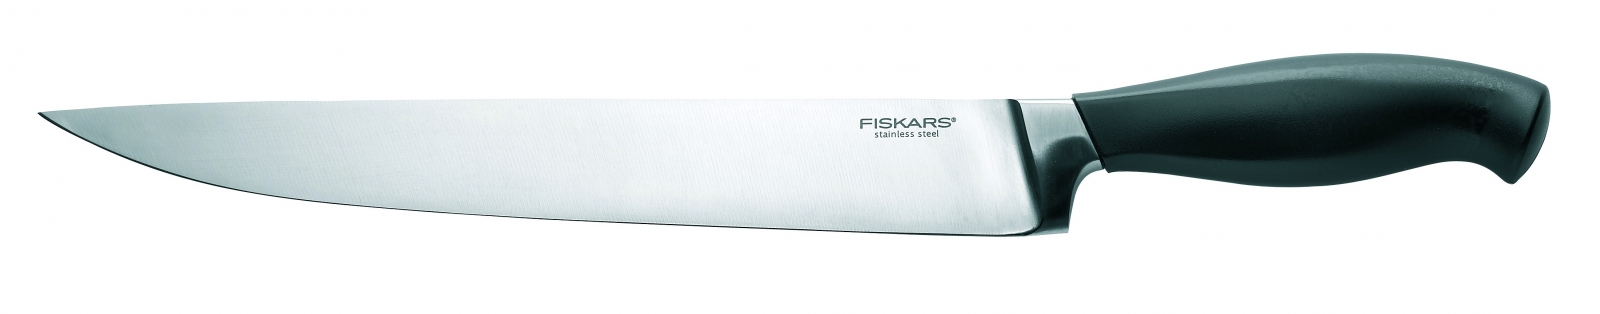 Nóż kuty do mięsa Solid Functional Form Pro 857328 Fiskars